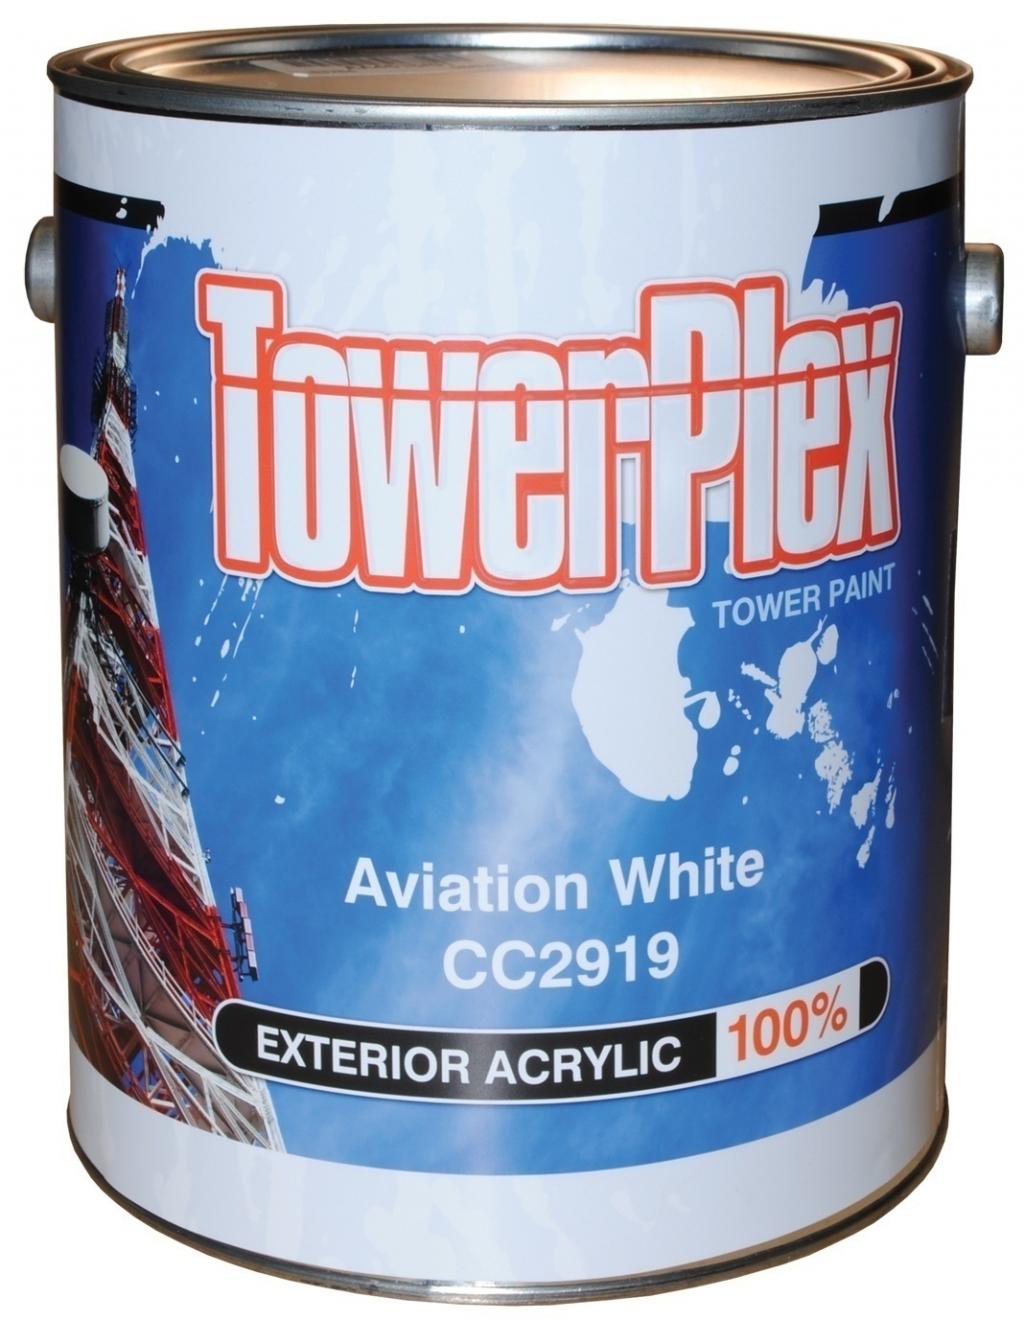 TowerPlex Aviation White Tower Paint (5 Gallons)